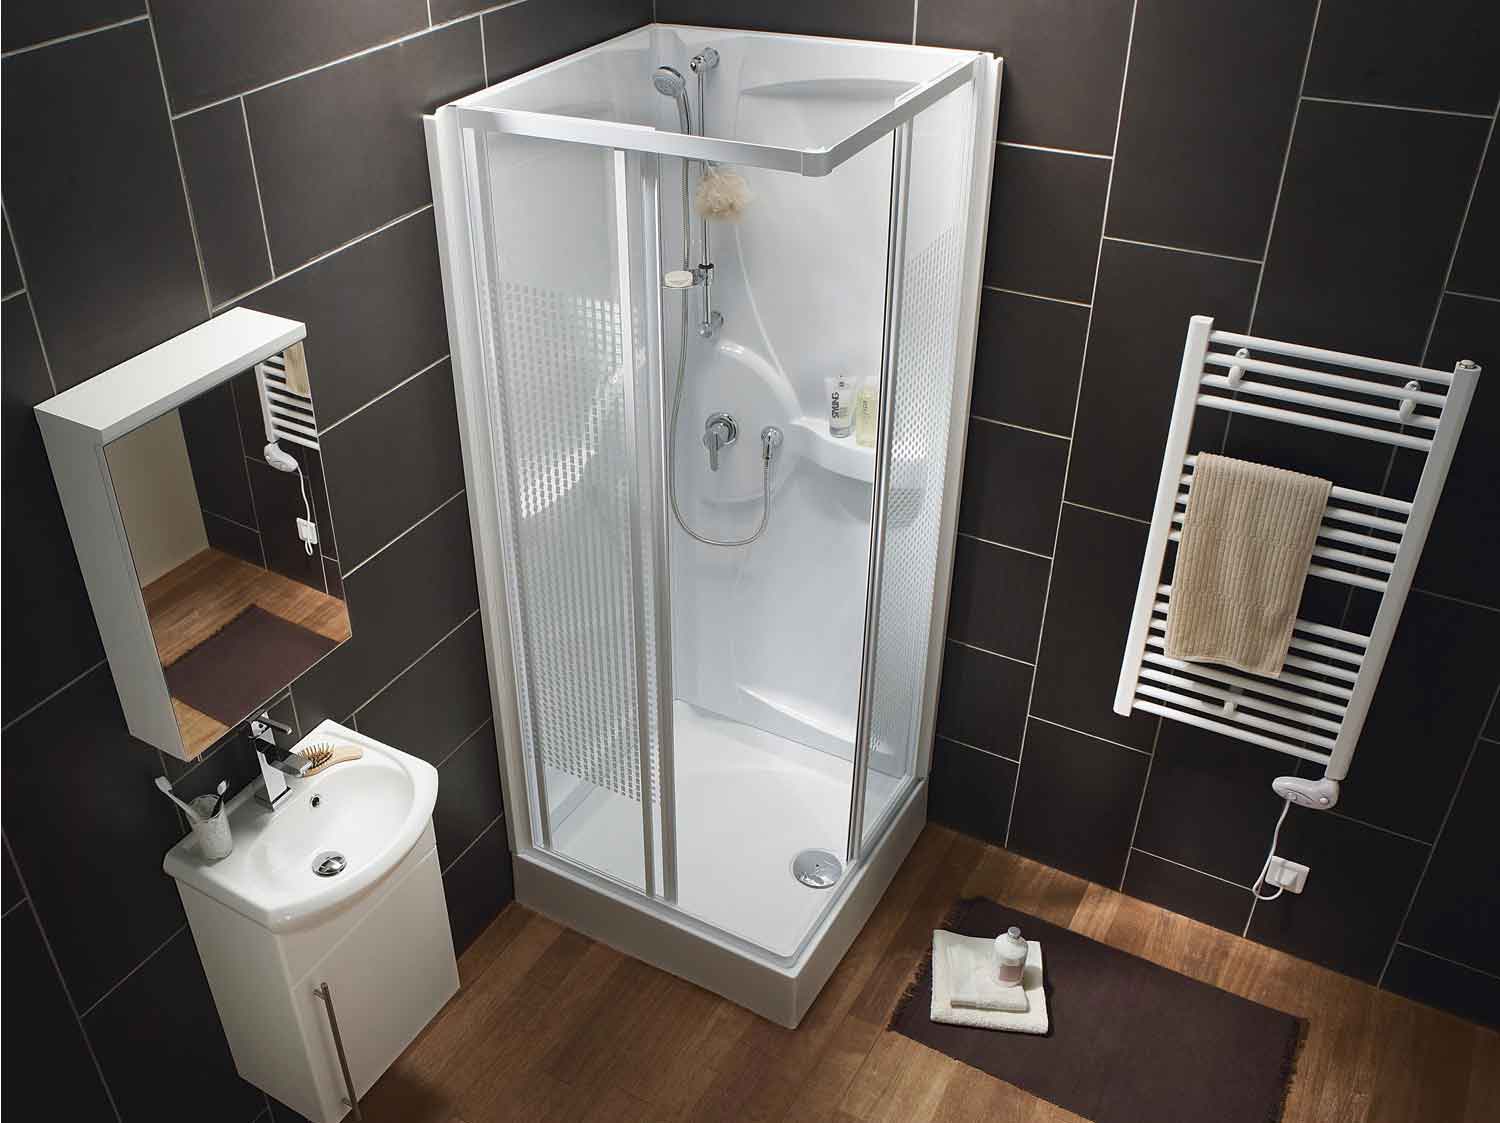 Salle de bains: quelle douche choisir (italienne, bac, cabine) ?